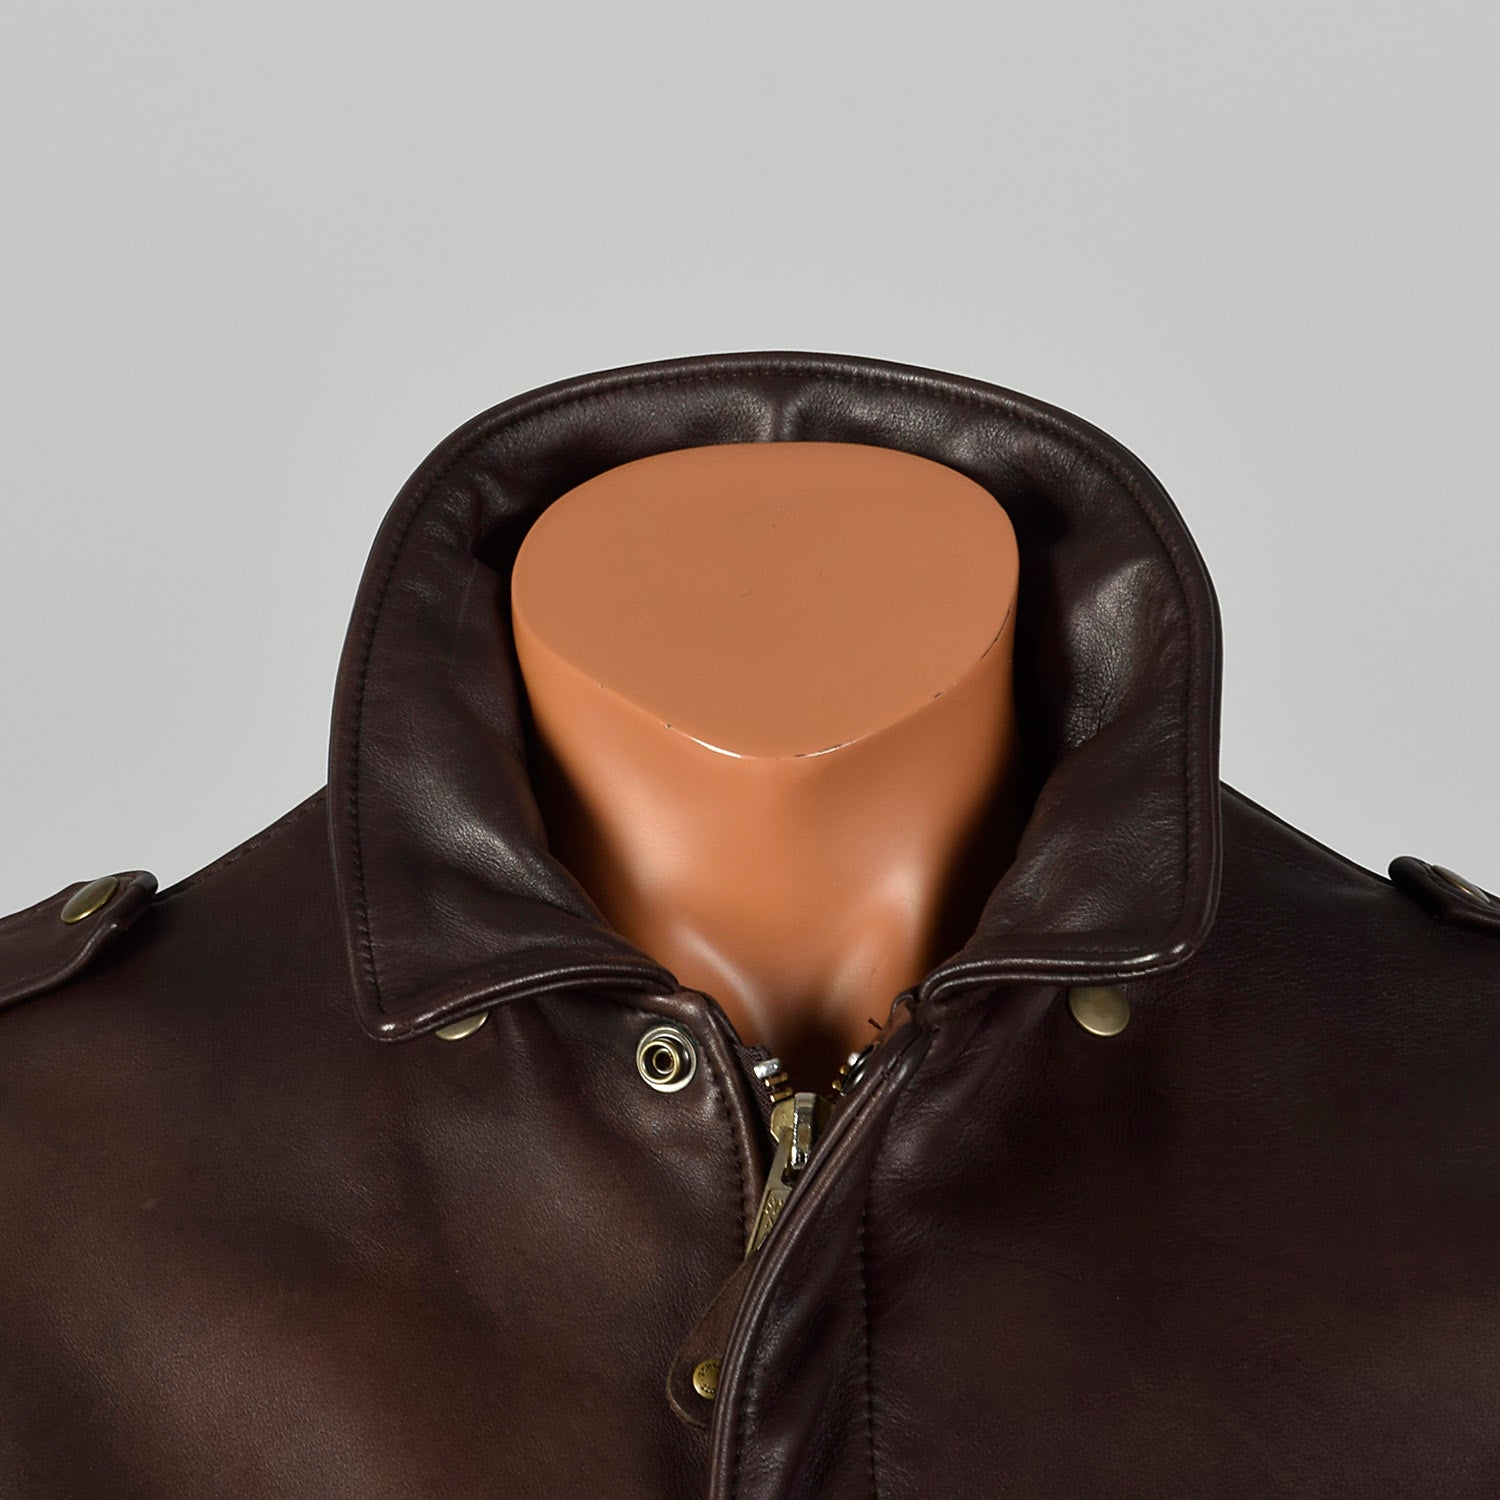 Large Mens Schott Brown Leather Jacket